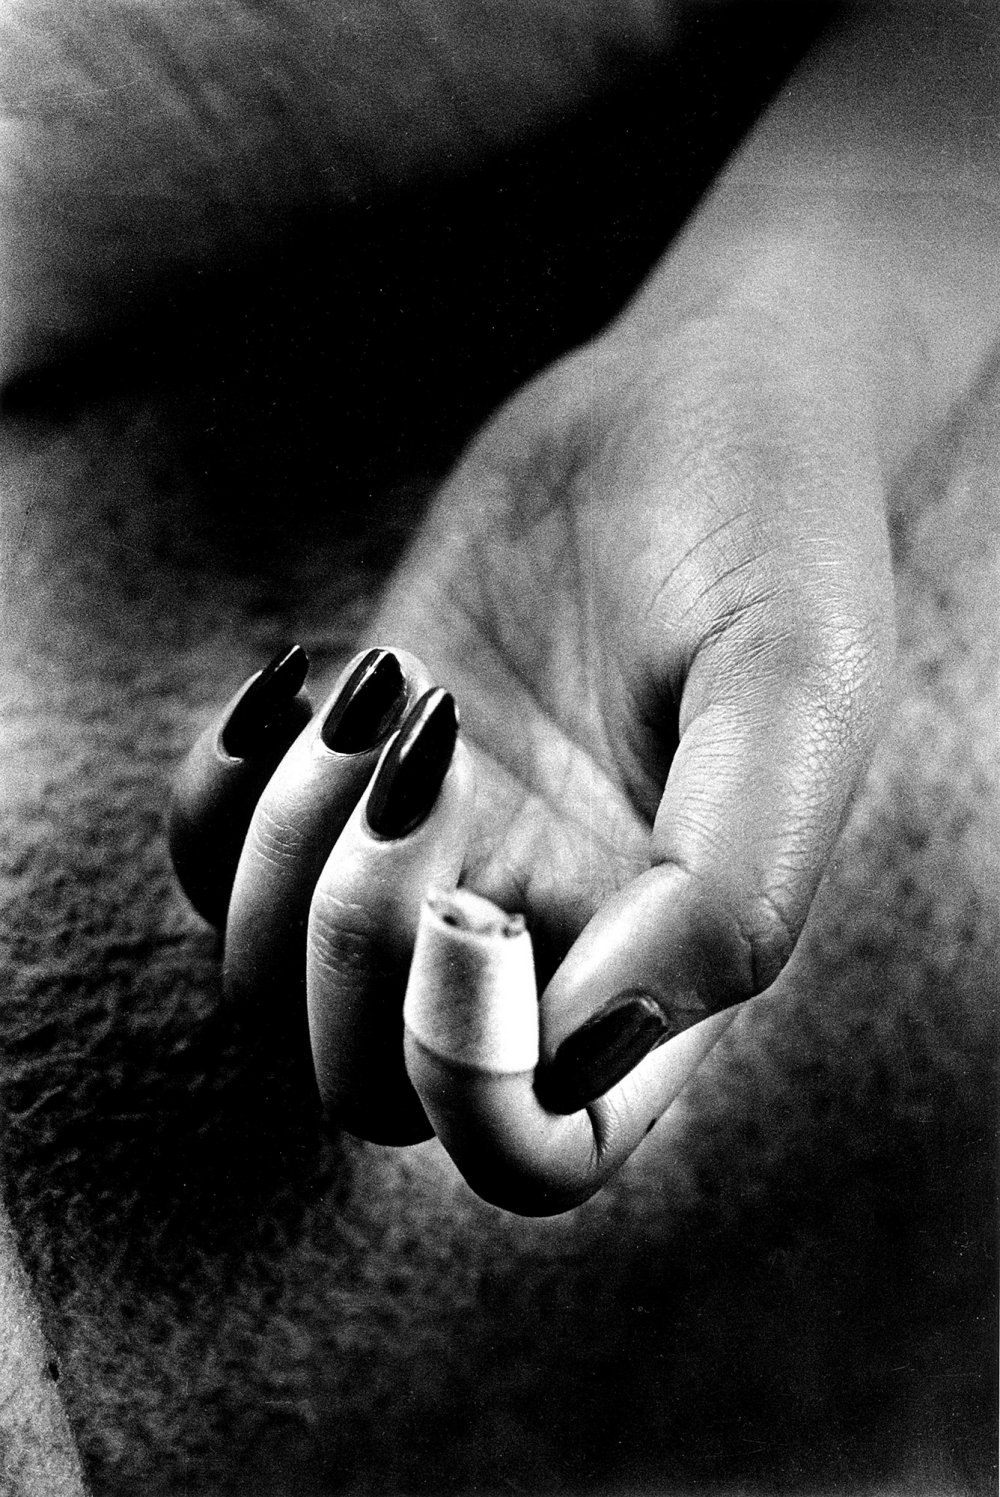 Daido Moriyama, Nails Claw, 1990, from the series 